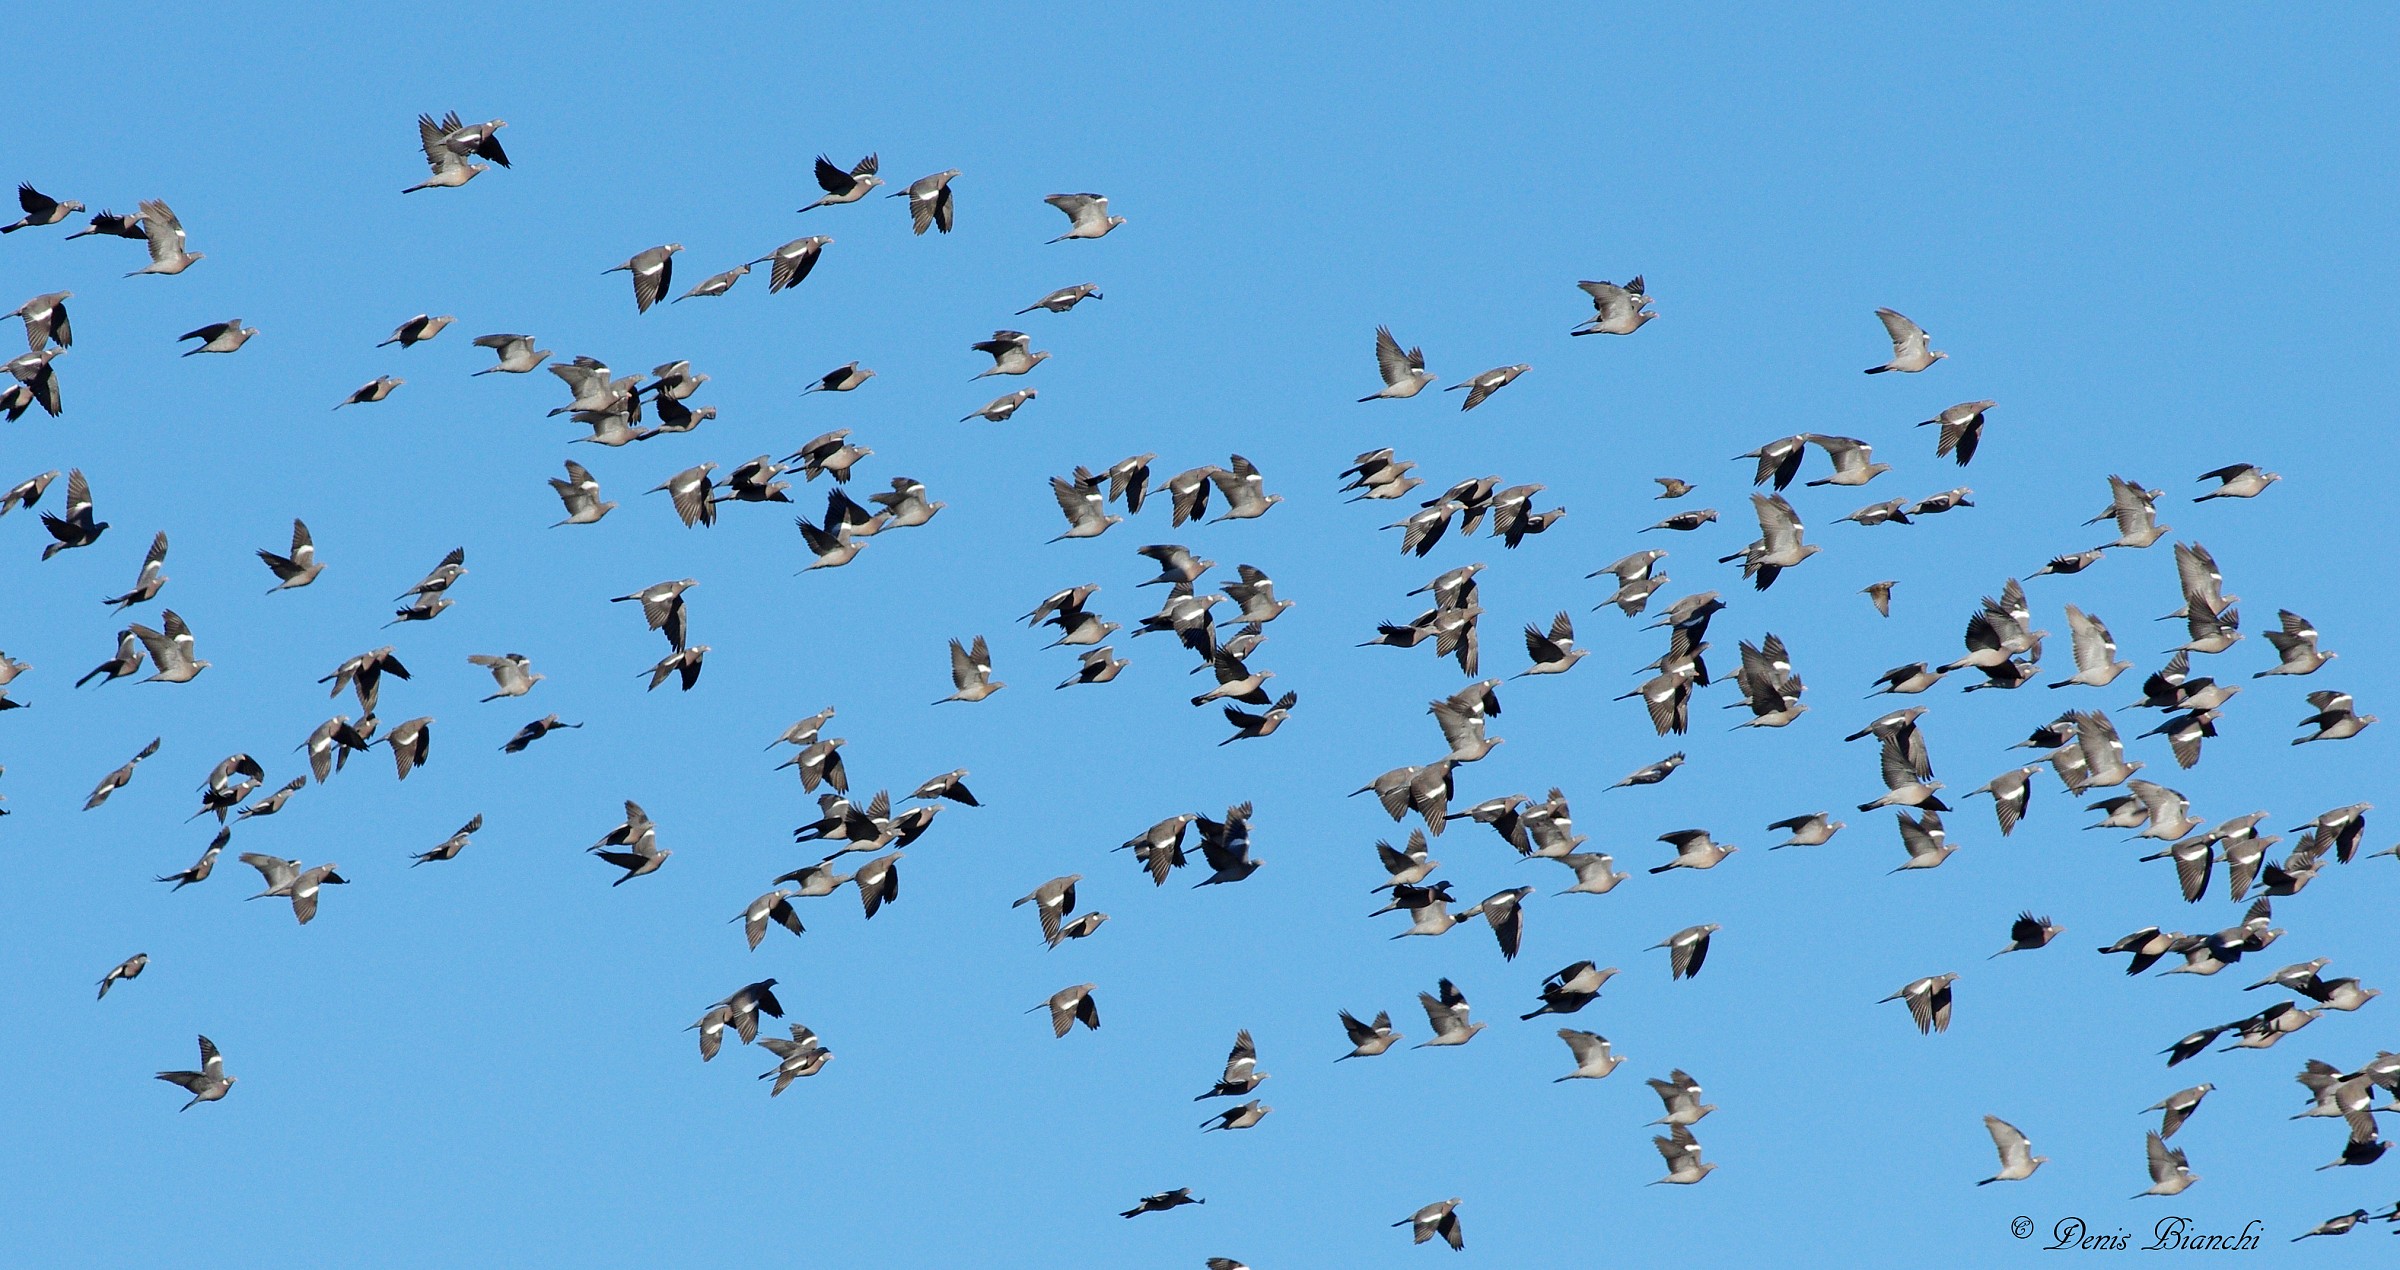 Pigeons migration in 2014...